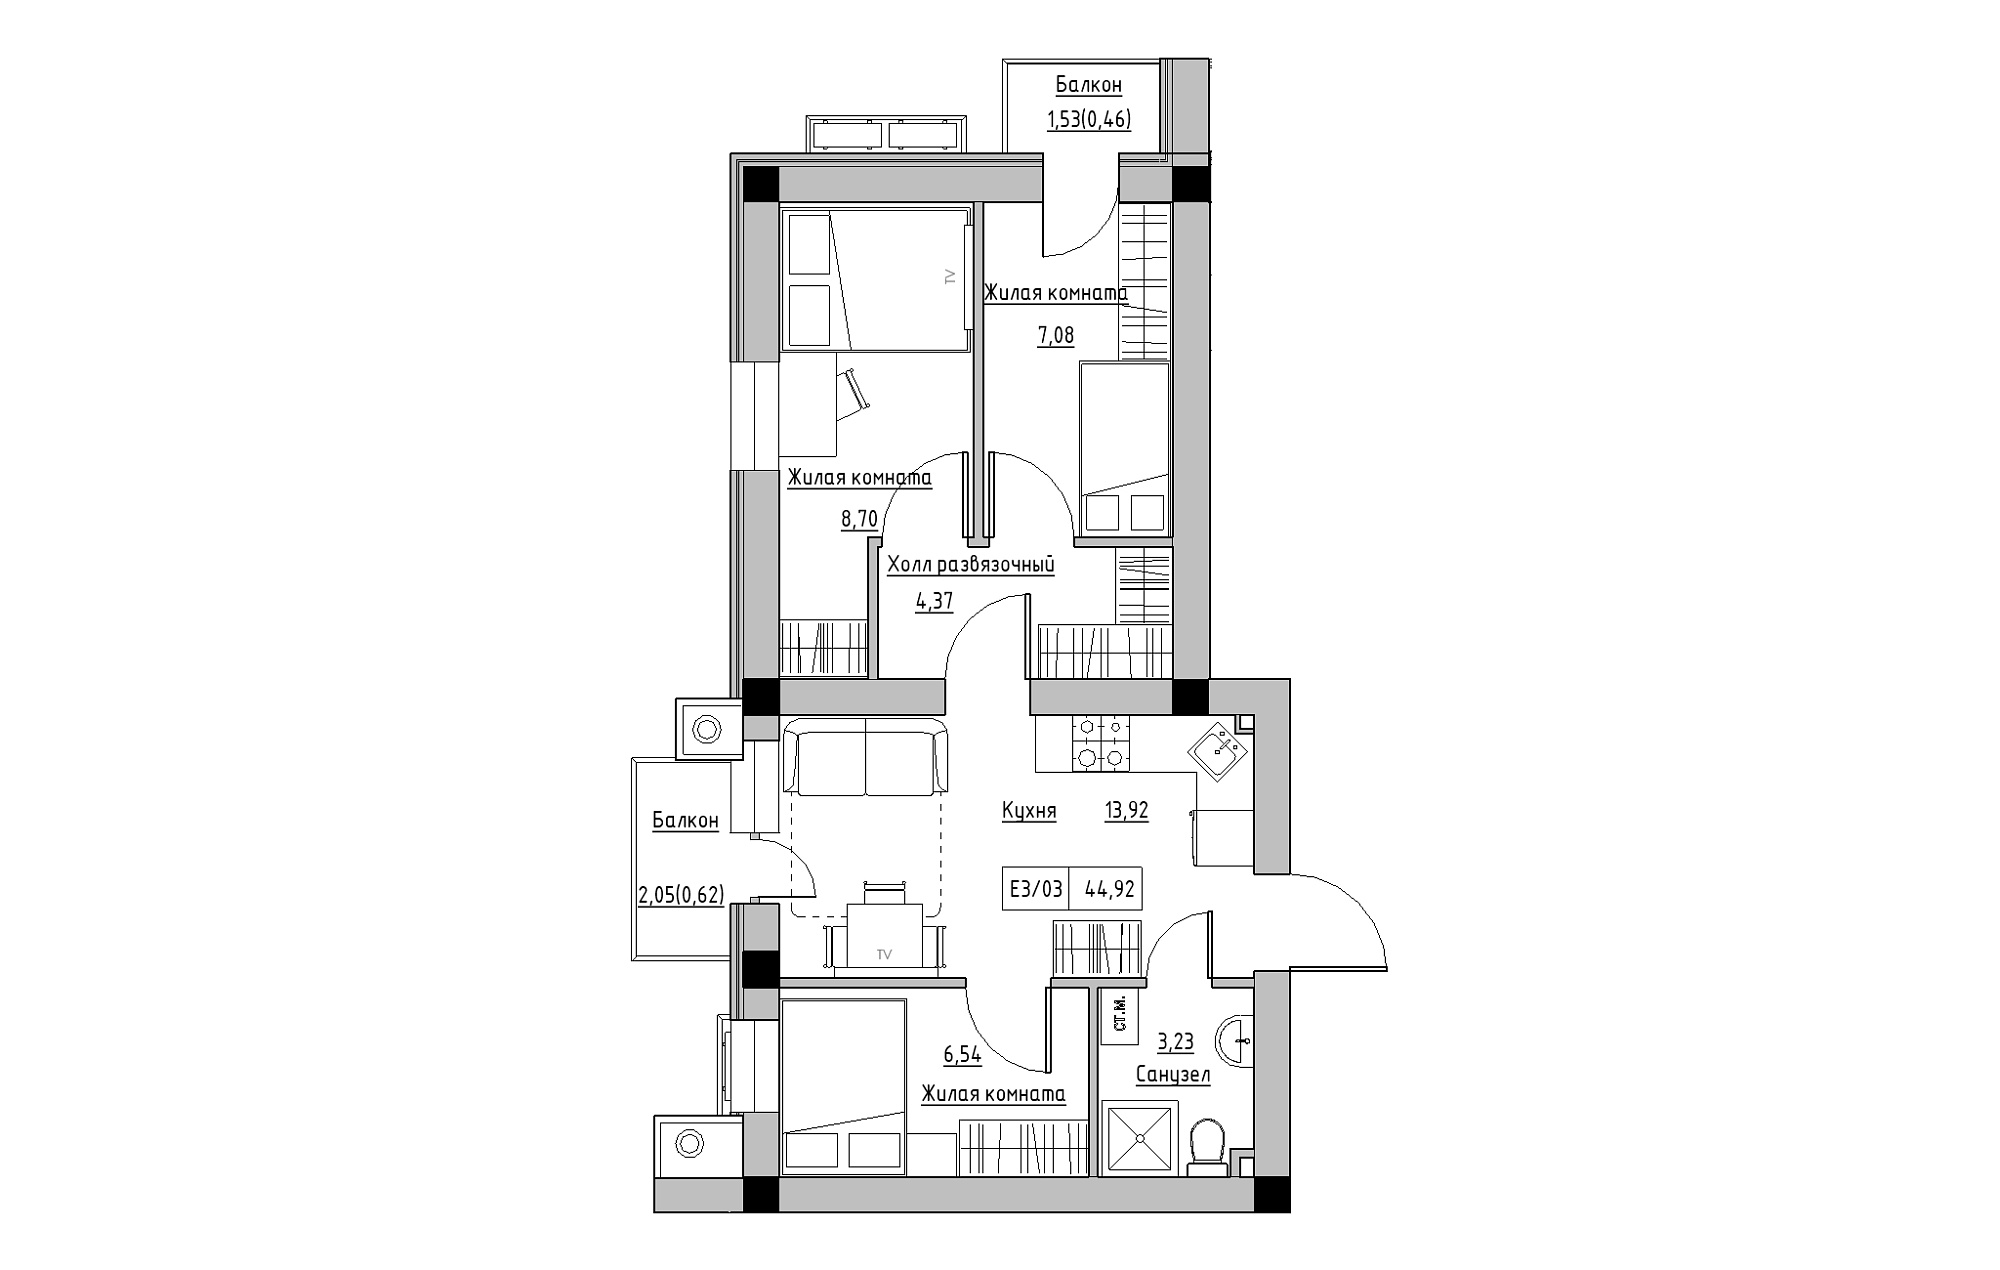 Planning 3-rm flats area 44.92m2, KS-013-05/0006.